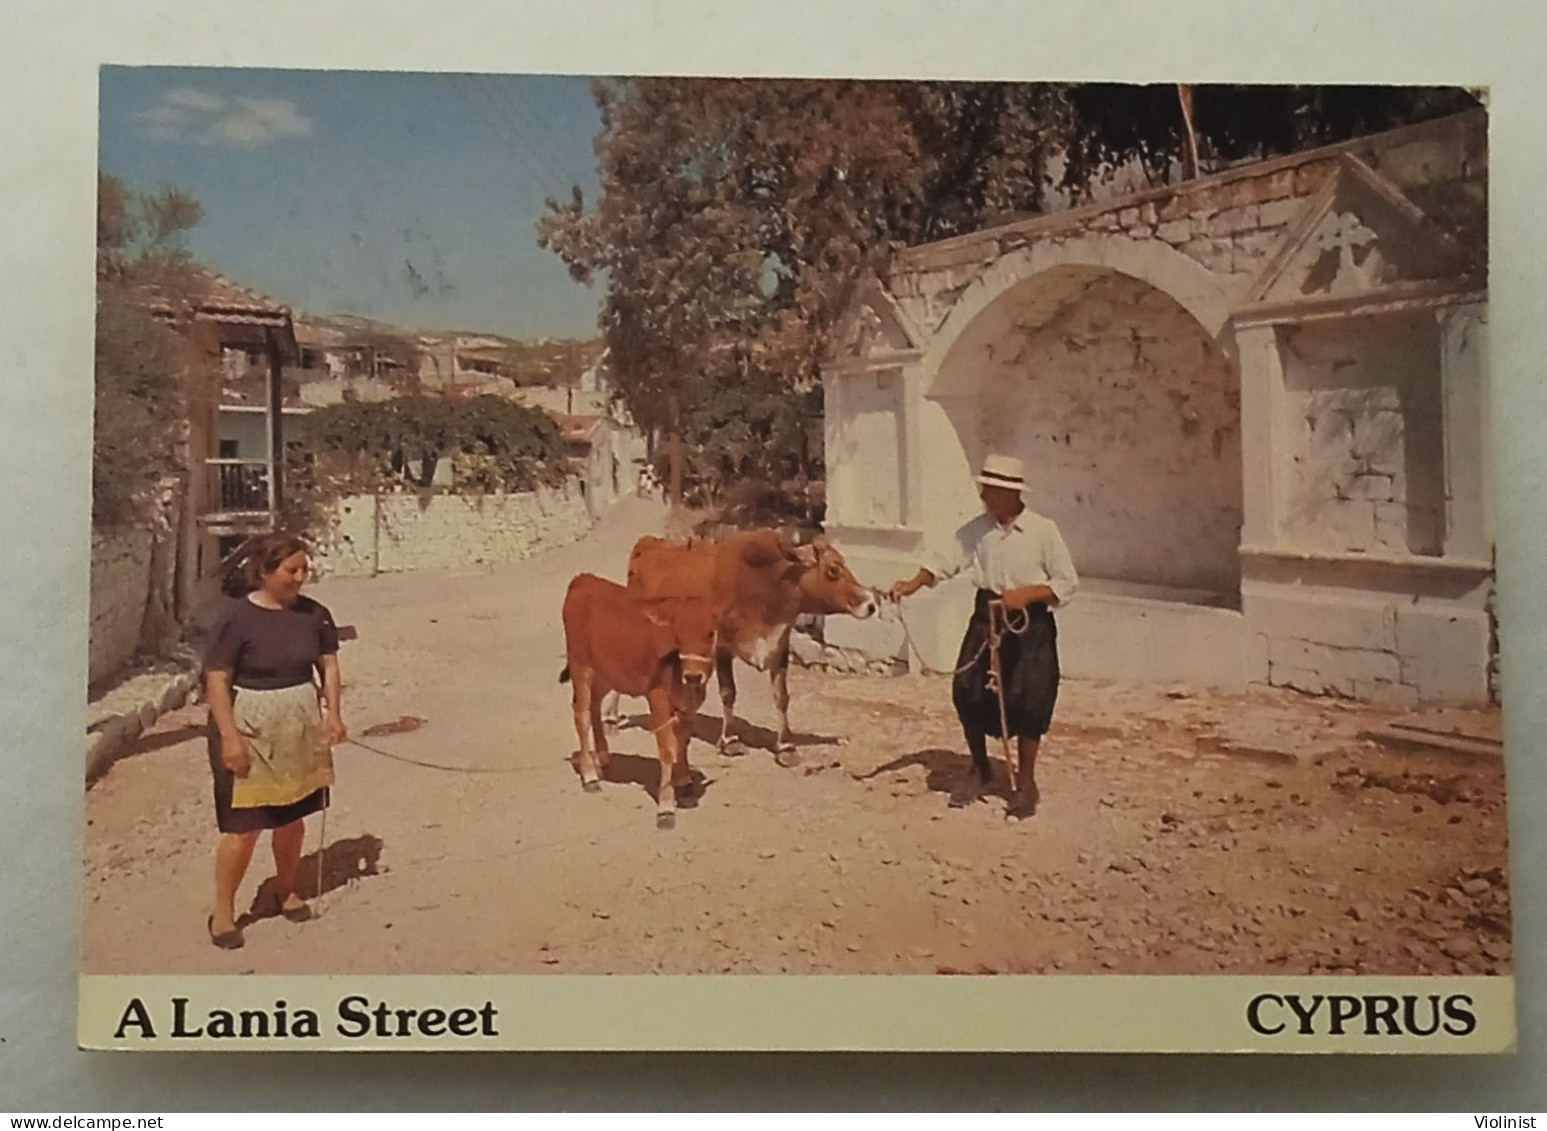 Cyprus-A Lania Street - Cyprus